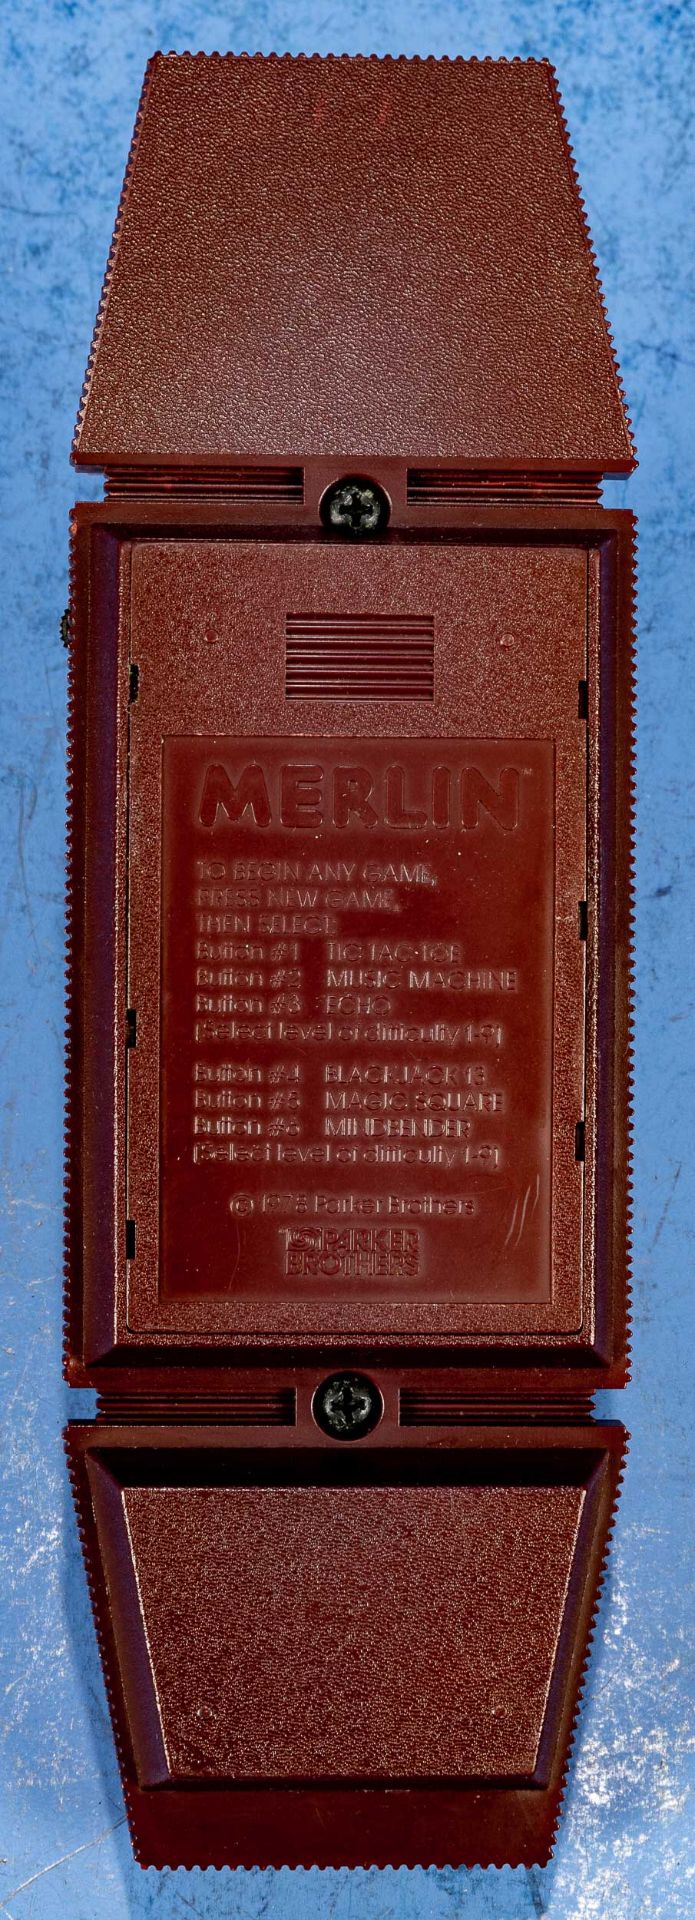 Ungeprüftes MERLIN-Spielgerät in Telefonhöreroptik aus dem Jahr 1978; Länge ca. 24,5 cm. - Image 6 of 7